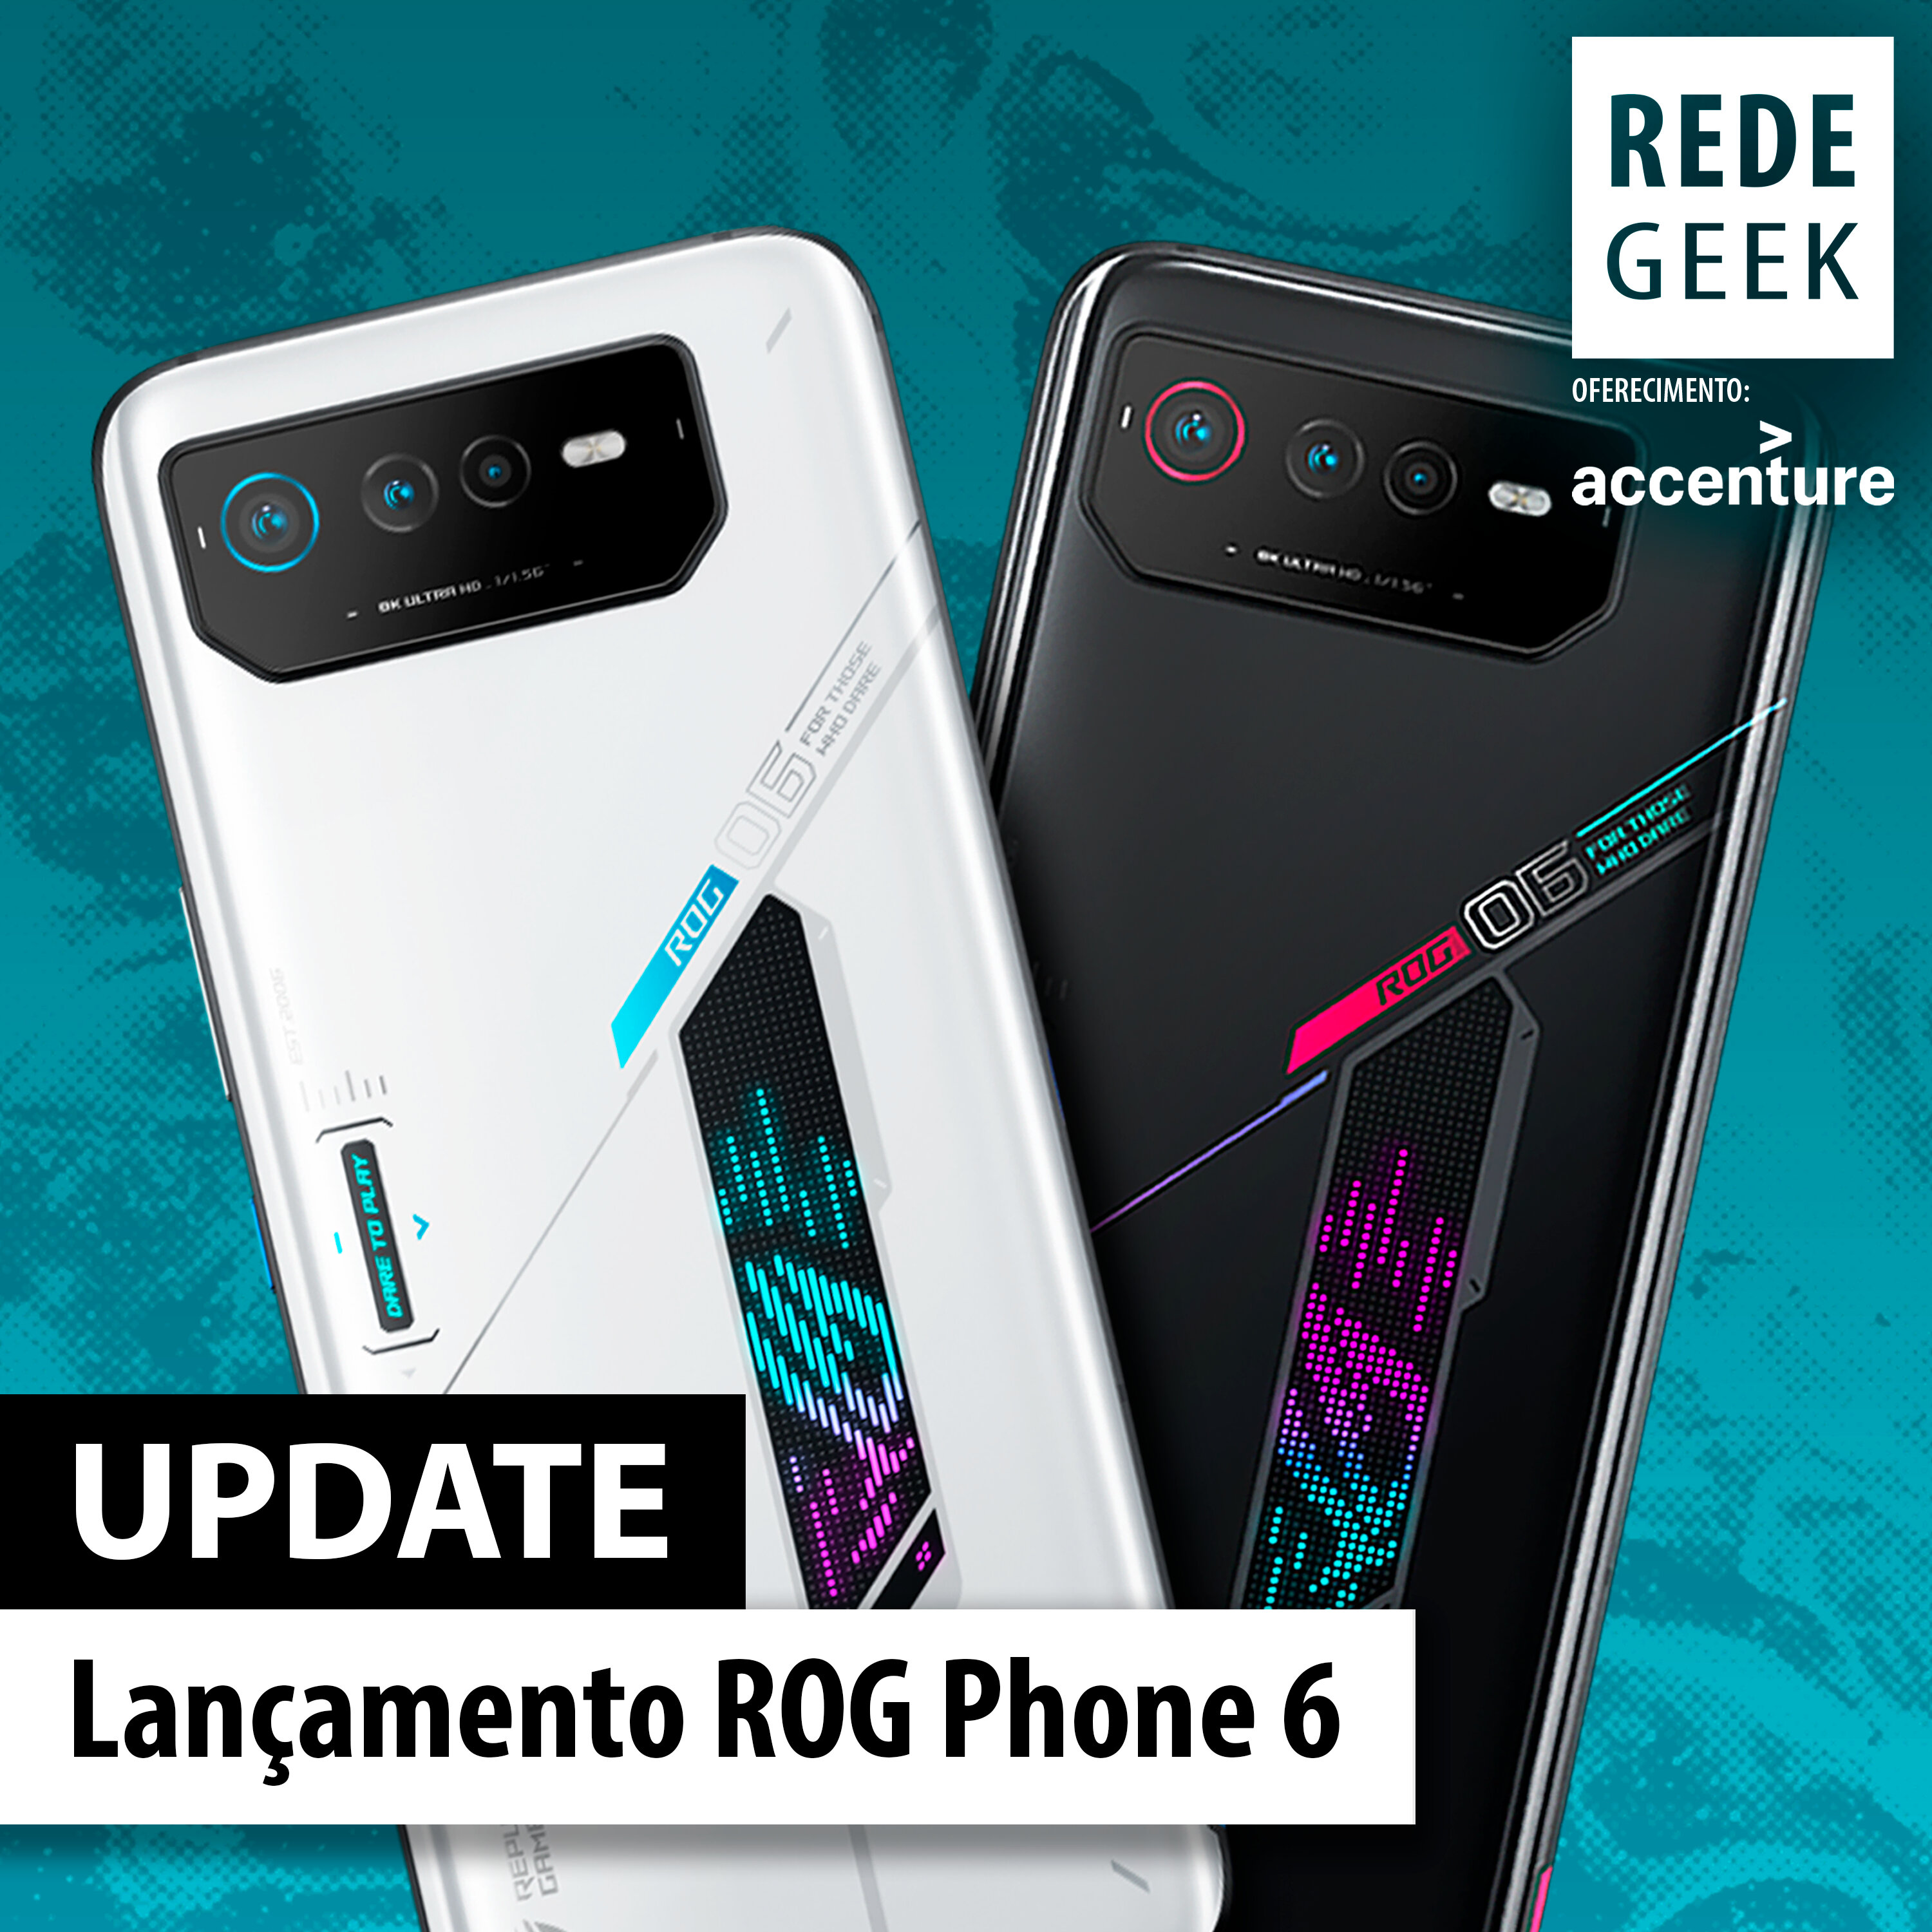 UPDATE - Lançamento ROG Phone 6